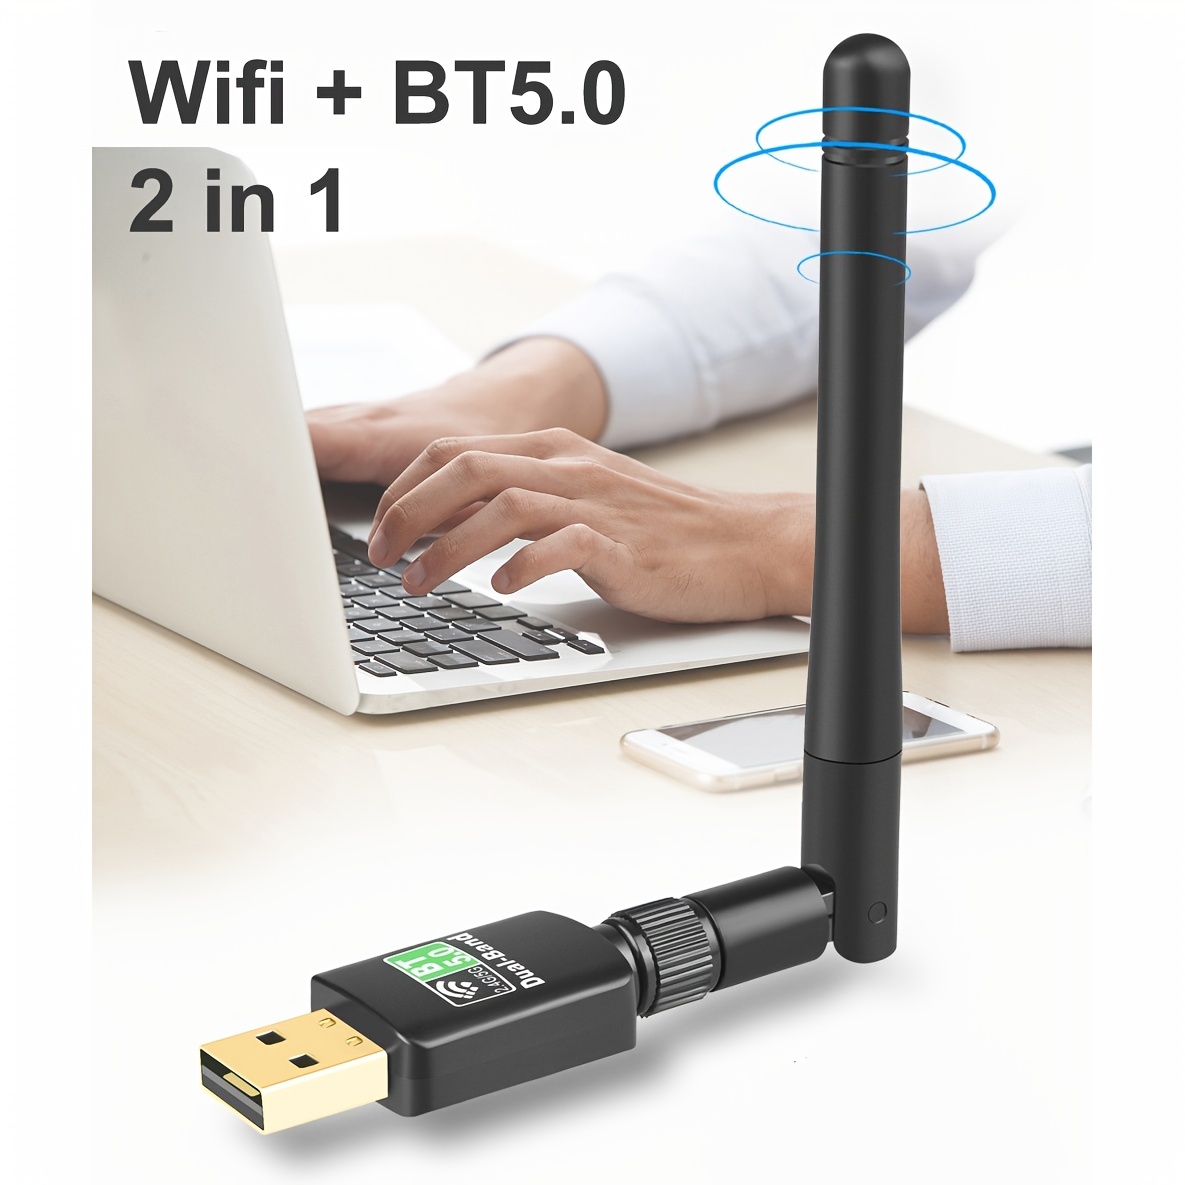  Nineplus Adaptador WiFi USB inalámbrico para PC - 1300 Mbps  antenas duales 5Dbi 5G/2.4G Adaptador WiFi para PC de escritorio portátil  Windows11/10/8/7/Vista/XP, adaptador inalámbrico para adaptadores :  Electrónica